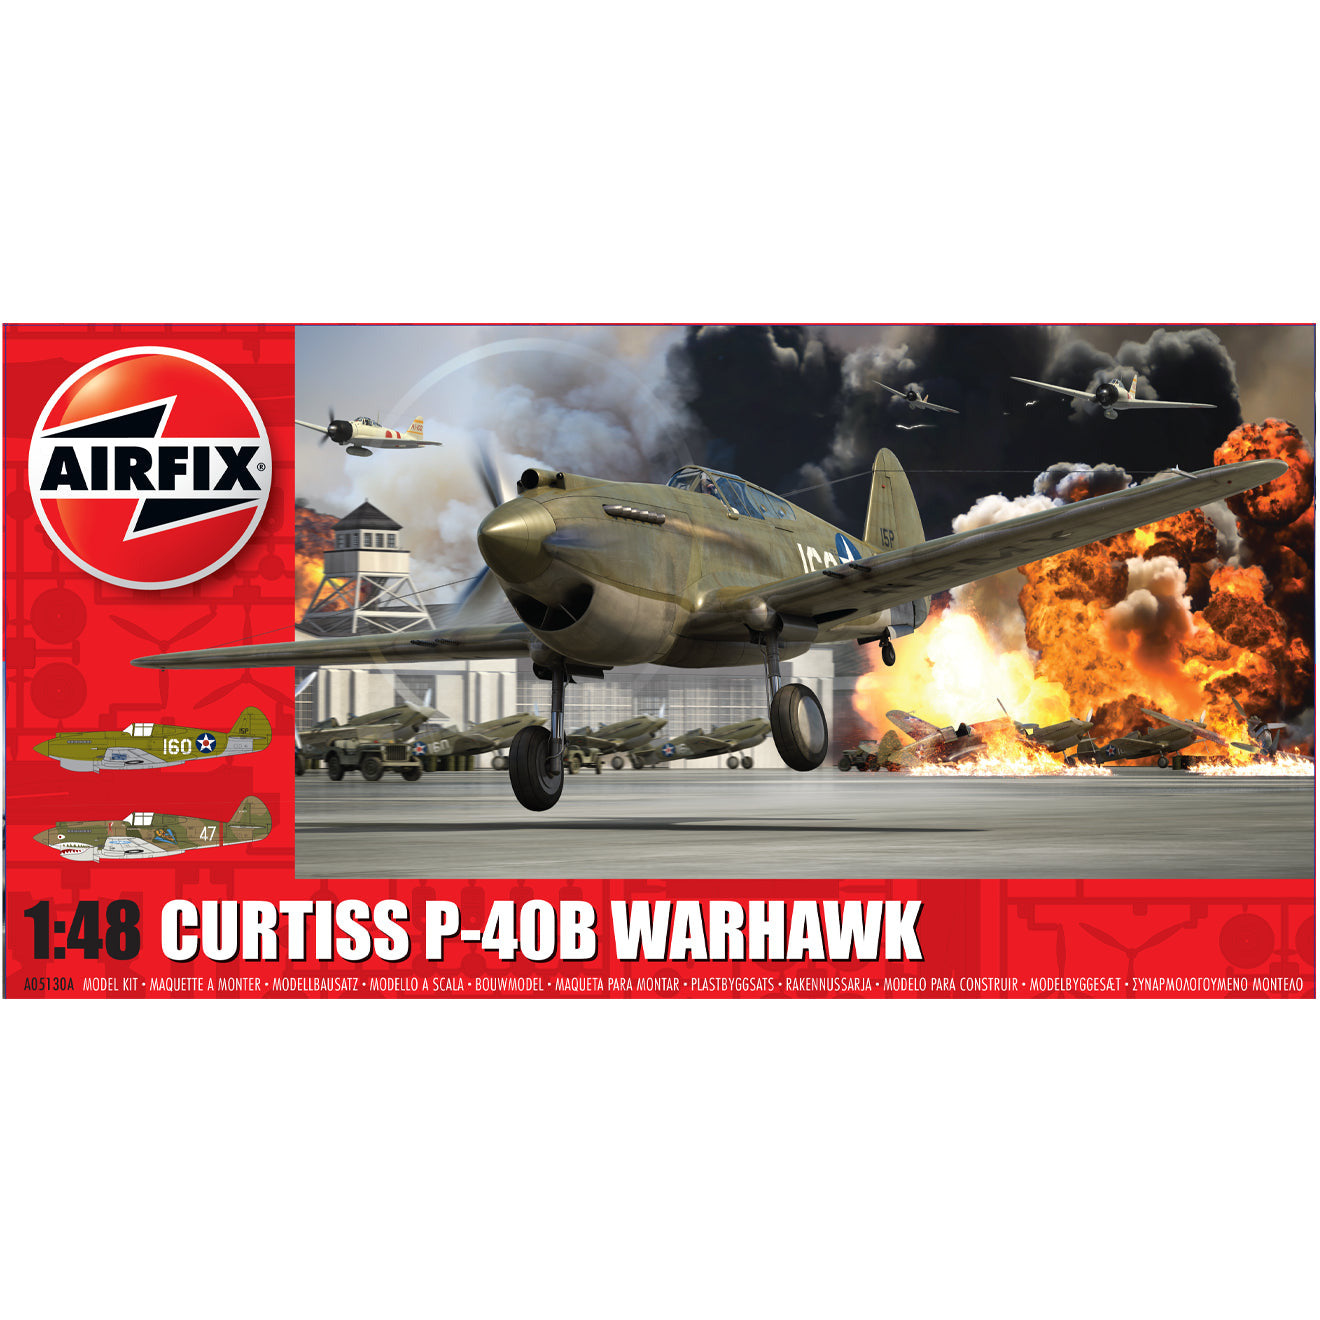 Curtiss P-40B Warhawk 1/48 #05130A by Airfix